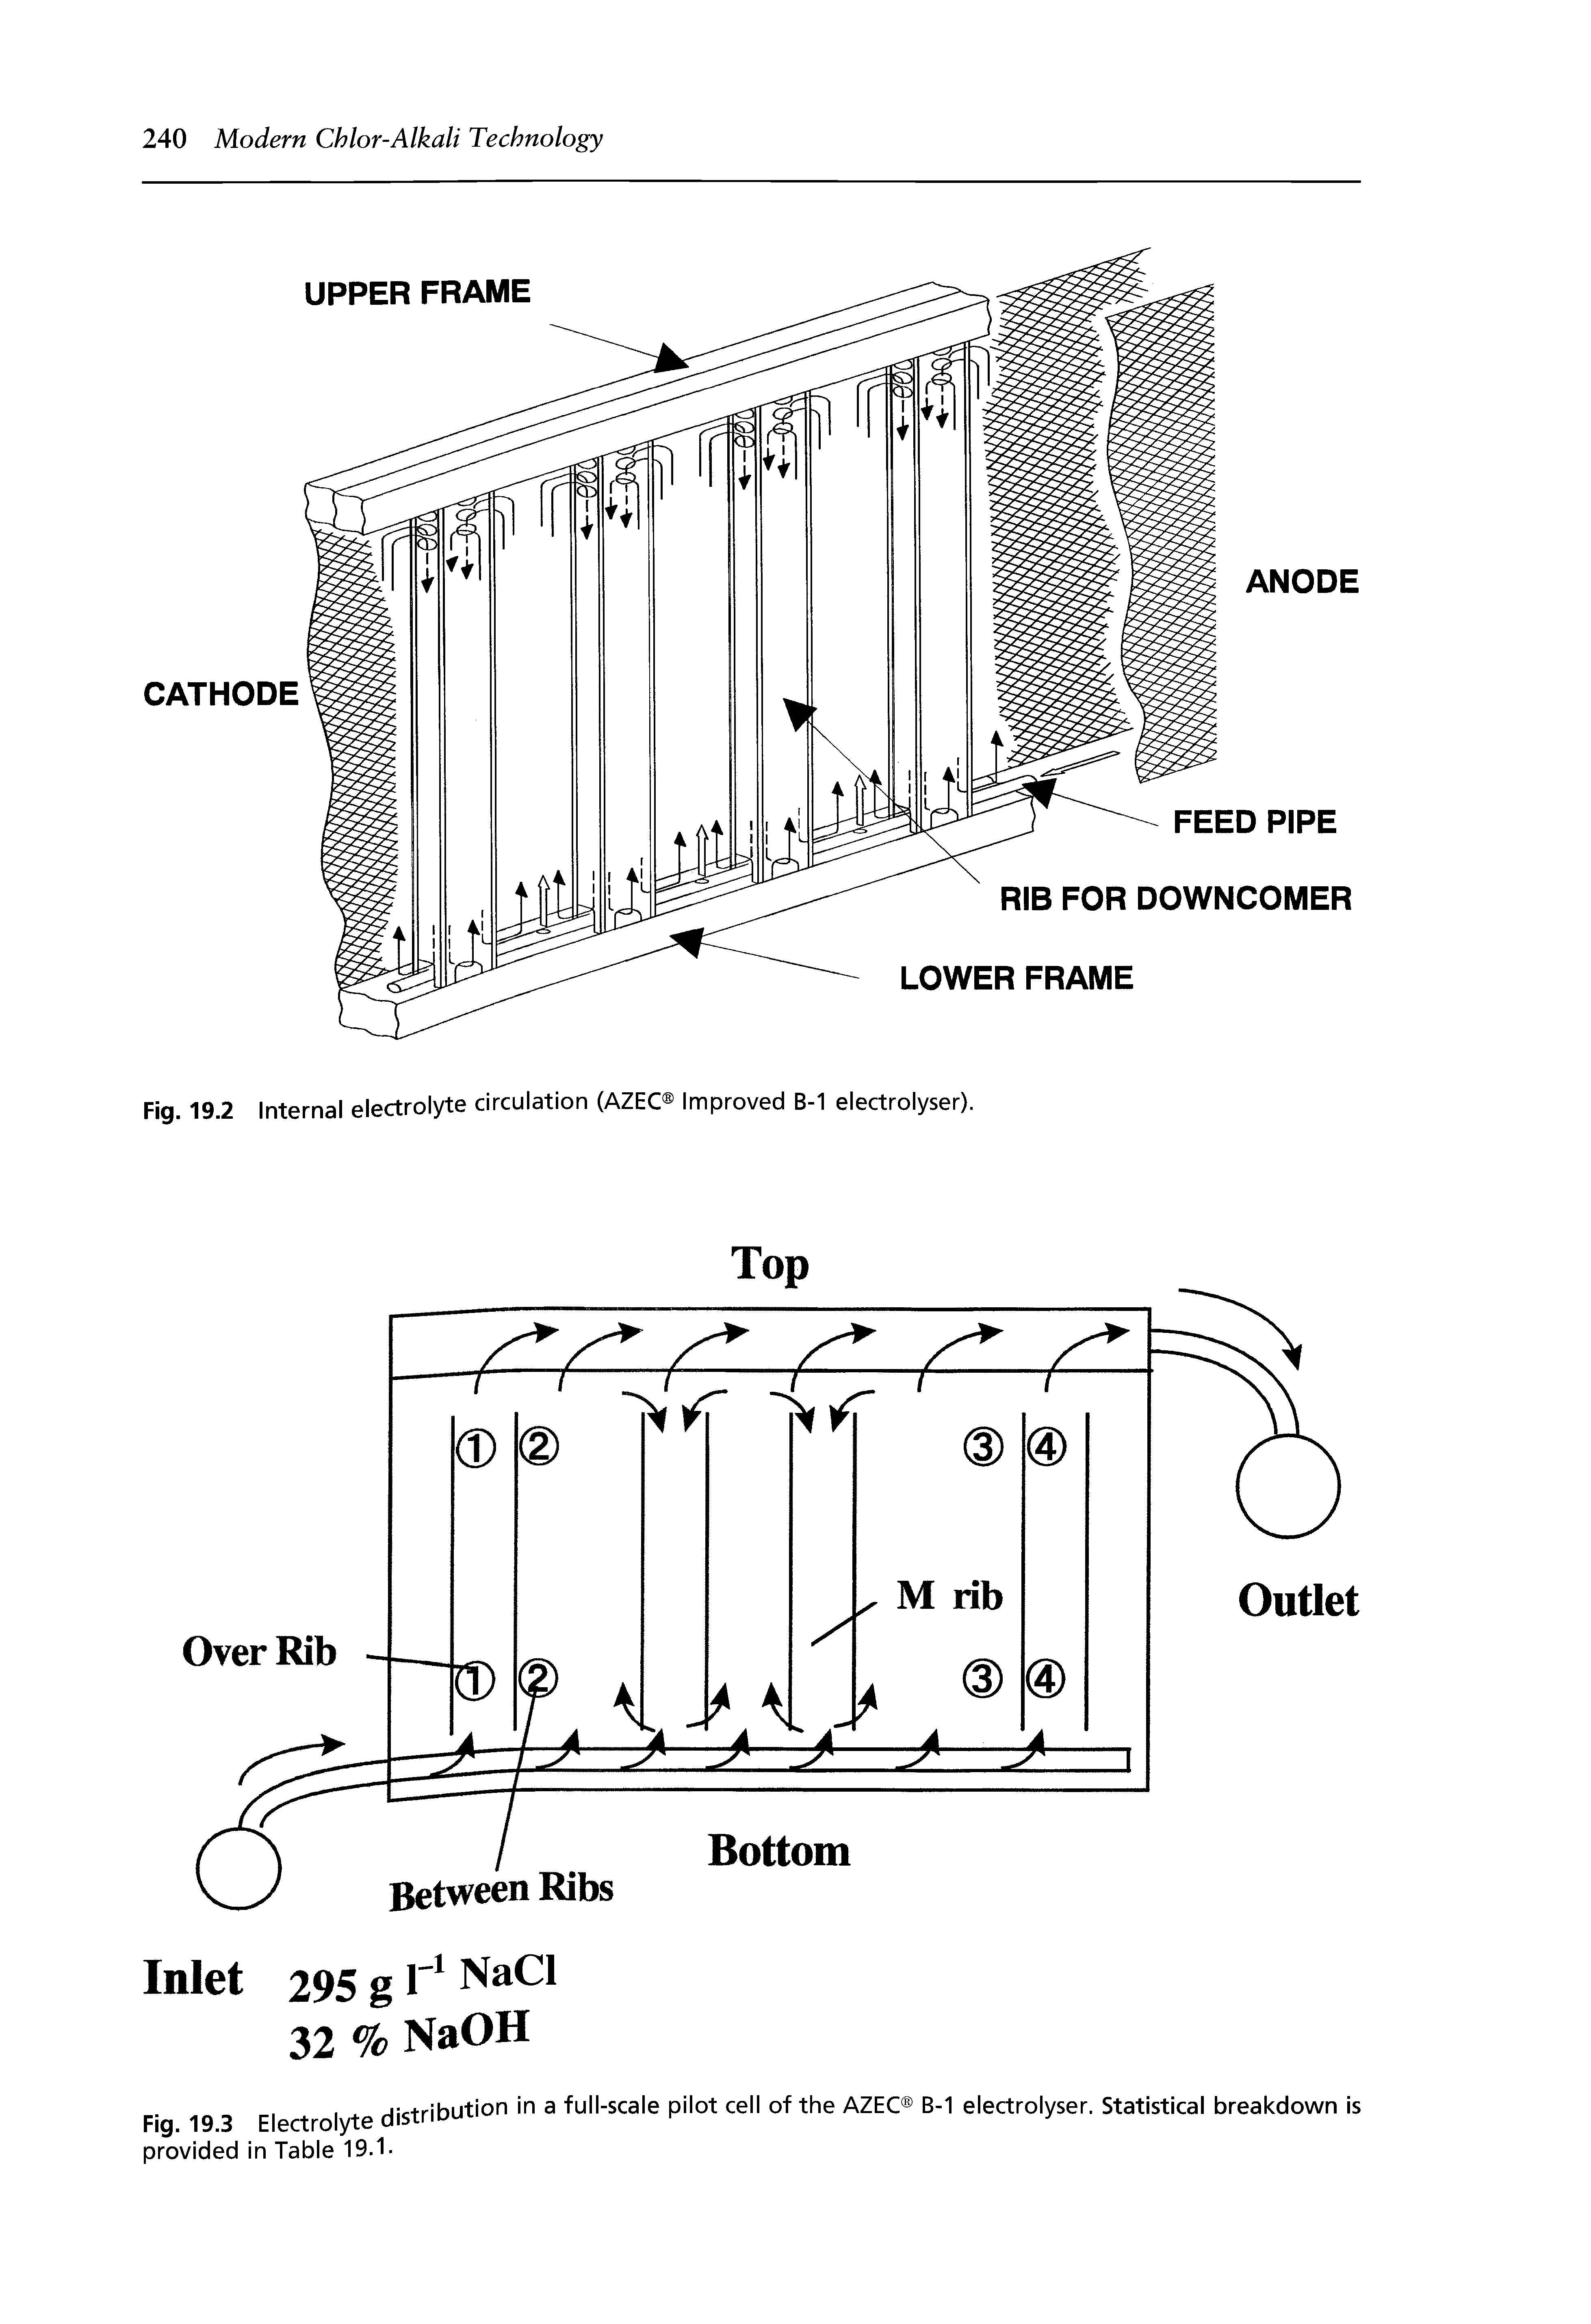 Fig. 19.2 Internal electrolyte circulation (AZEC Improved B-1 electrolyser).